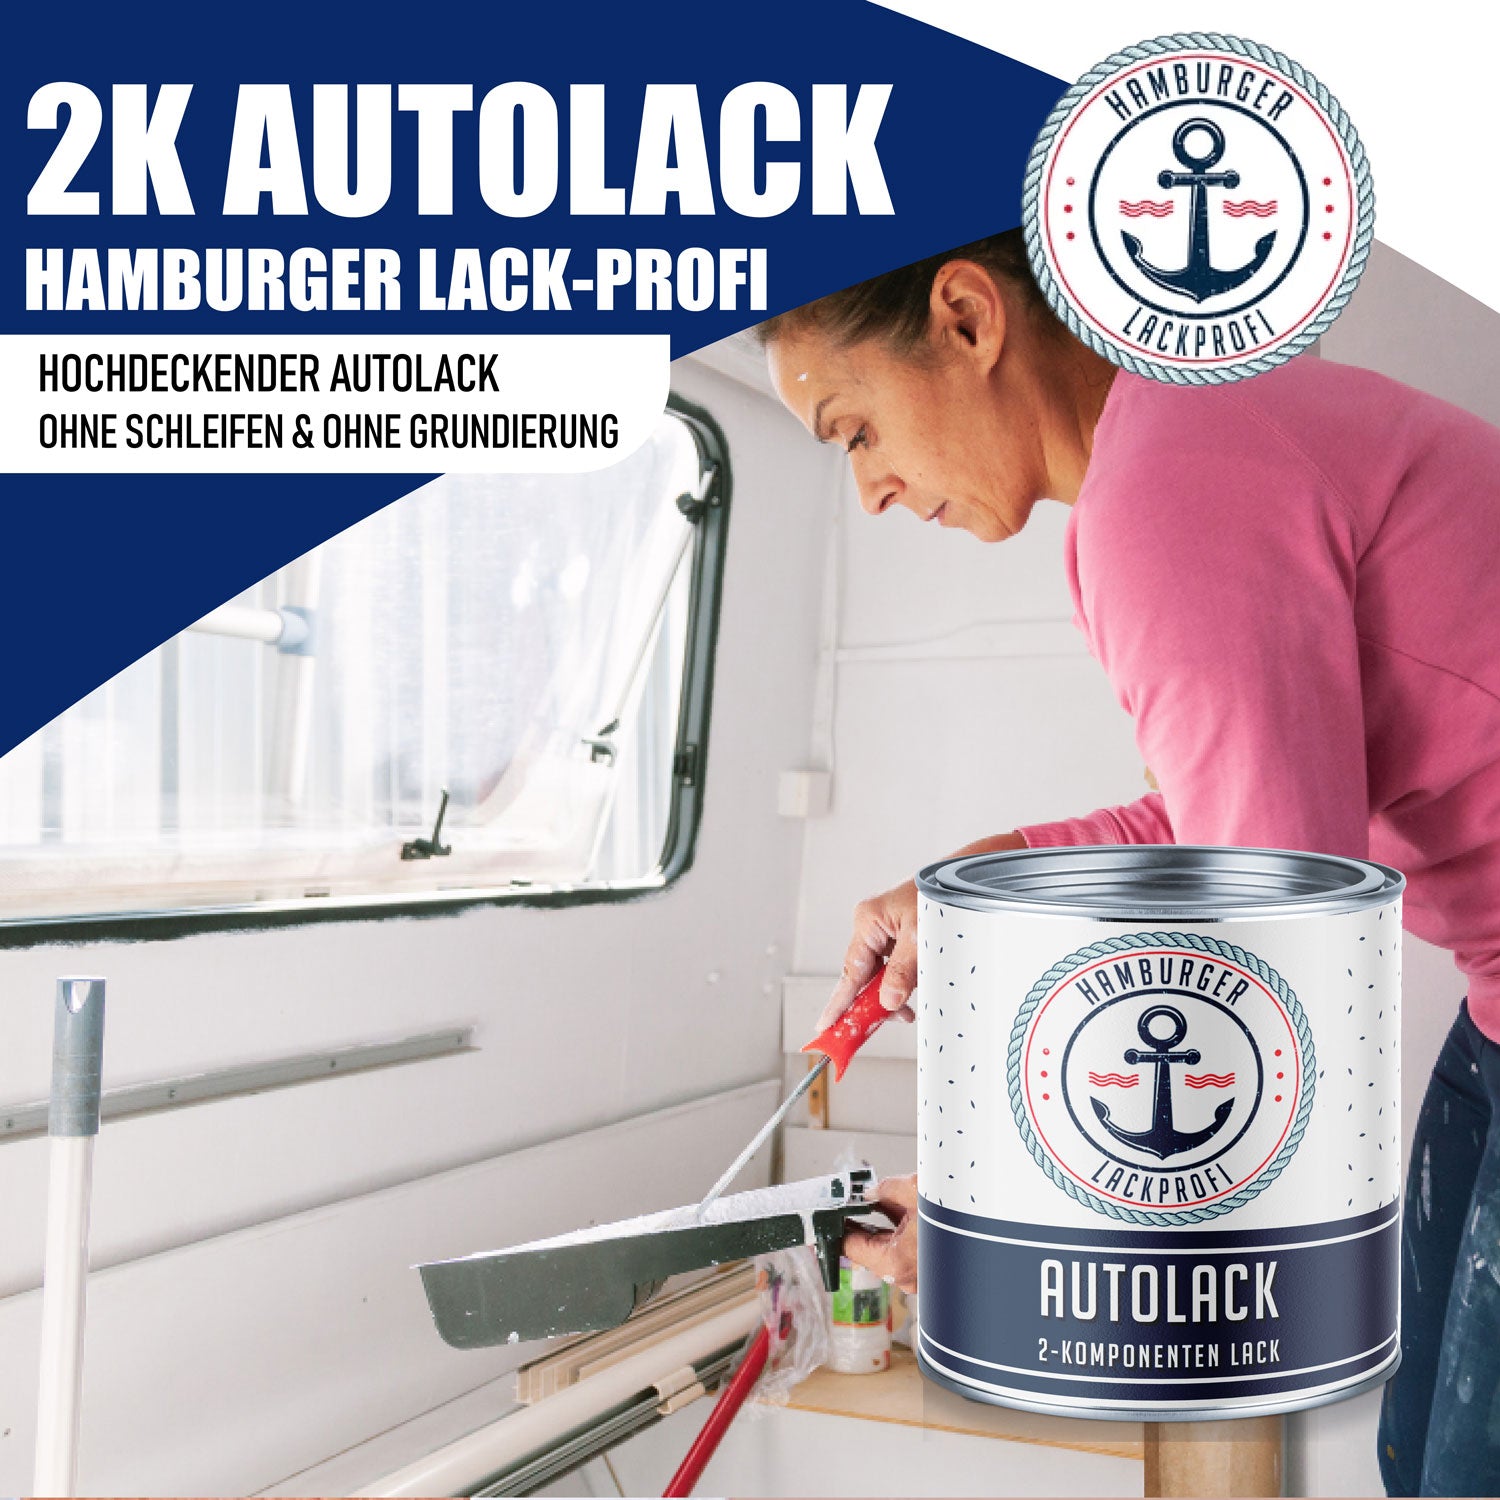 Hamburger Lack-Profi 2K Autolack in Hellrotorange RAL 2008 mit Lackierset (X300) & Verdünnung (1 L) - 30% Sparangebot